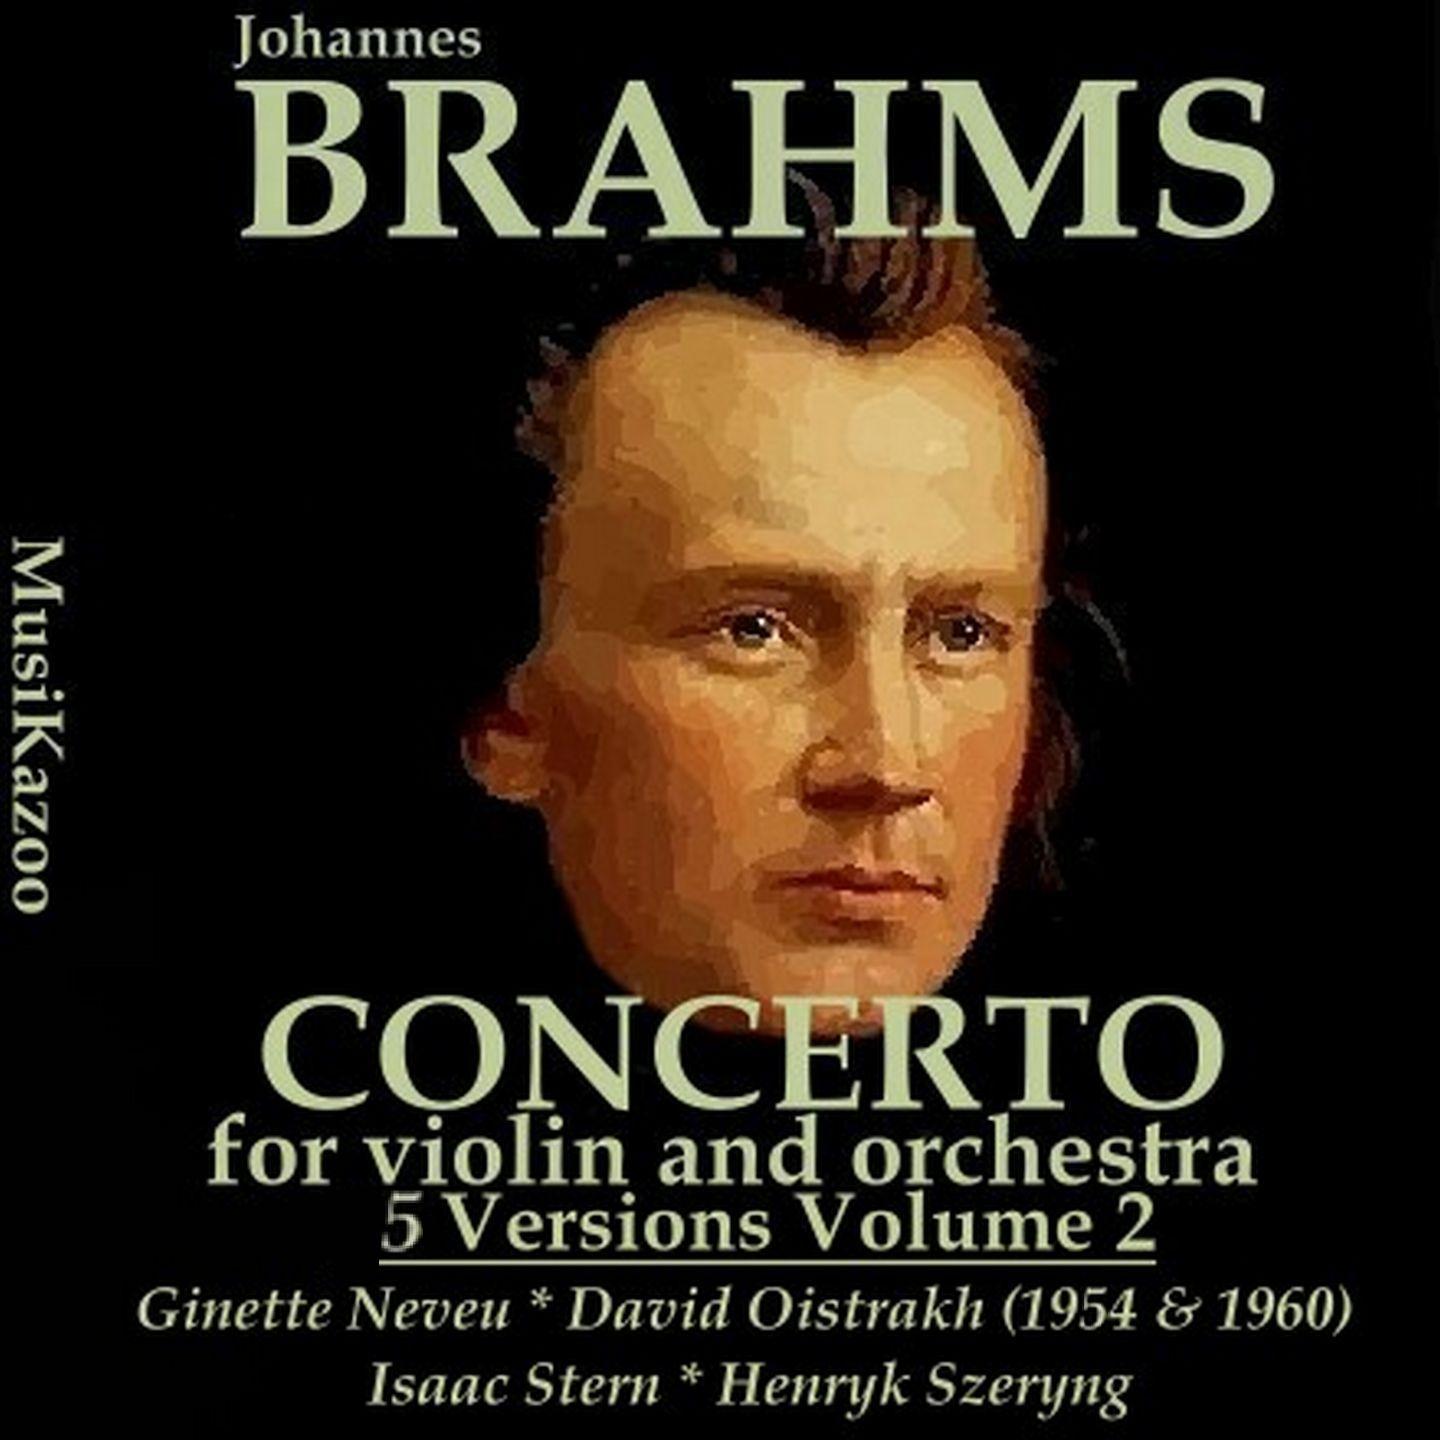 Concerto for Violin and Orchestra in D Major, Op. 77: II. Adagio